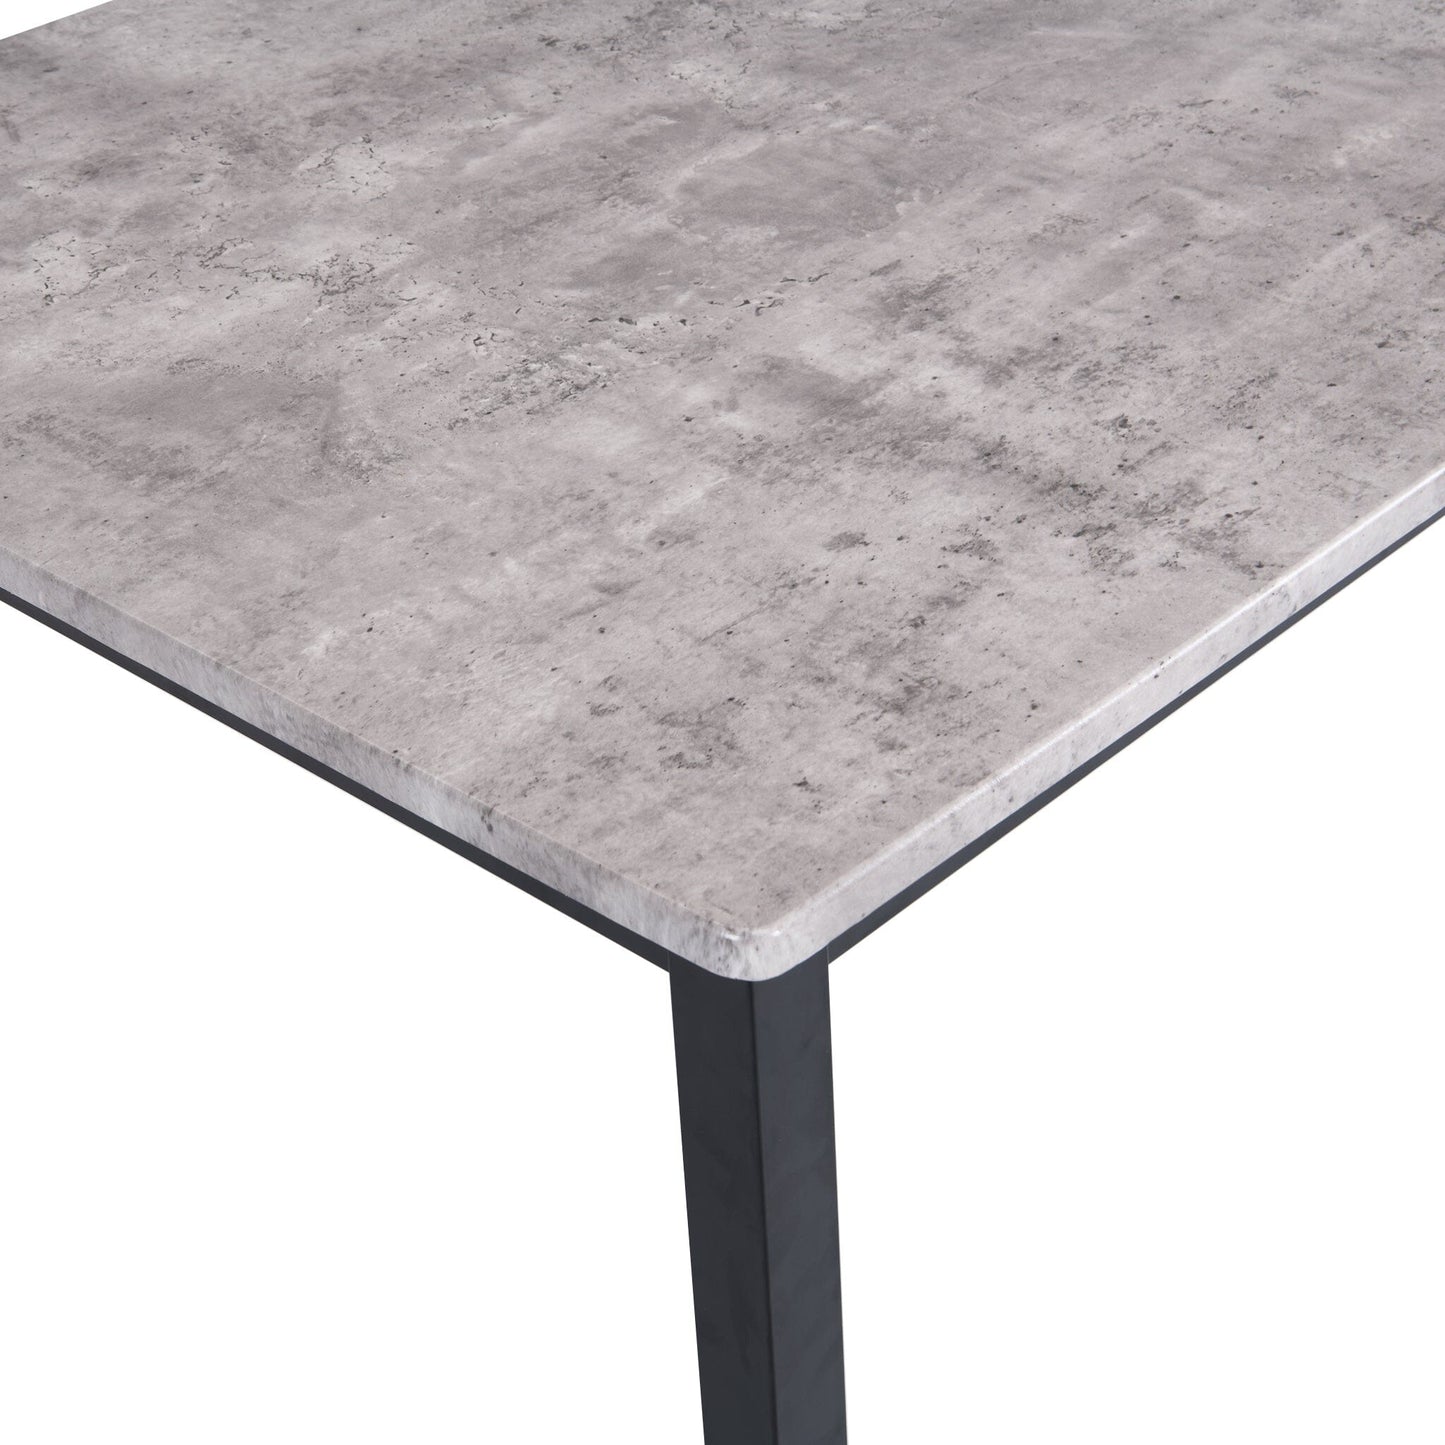 Milo Black Concrete effect Dining Table Set - 4 seater - Bella Teal Black Chairs Set - Laura James